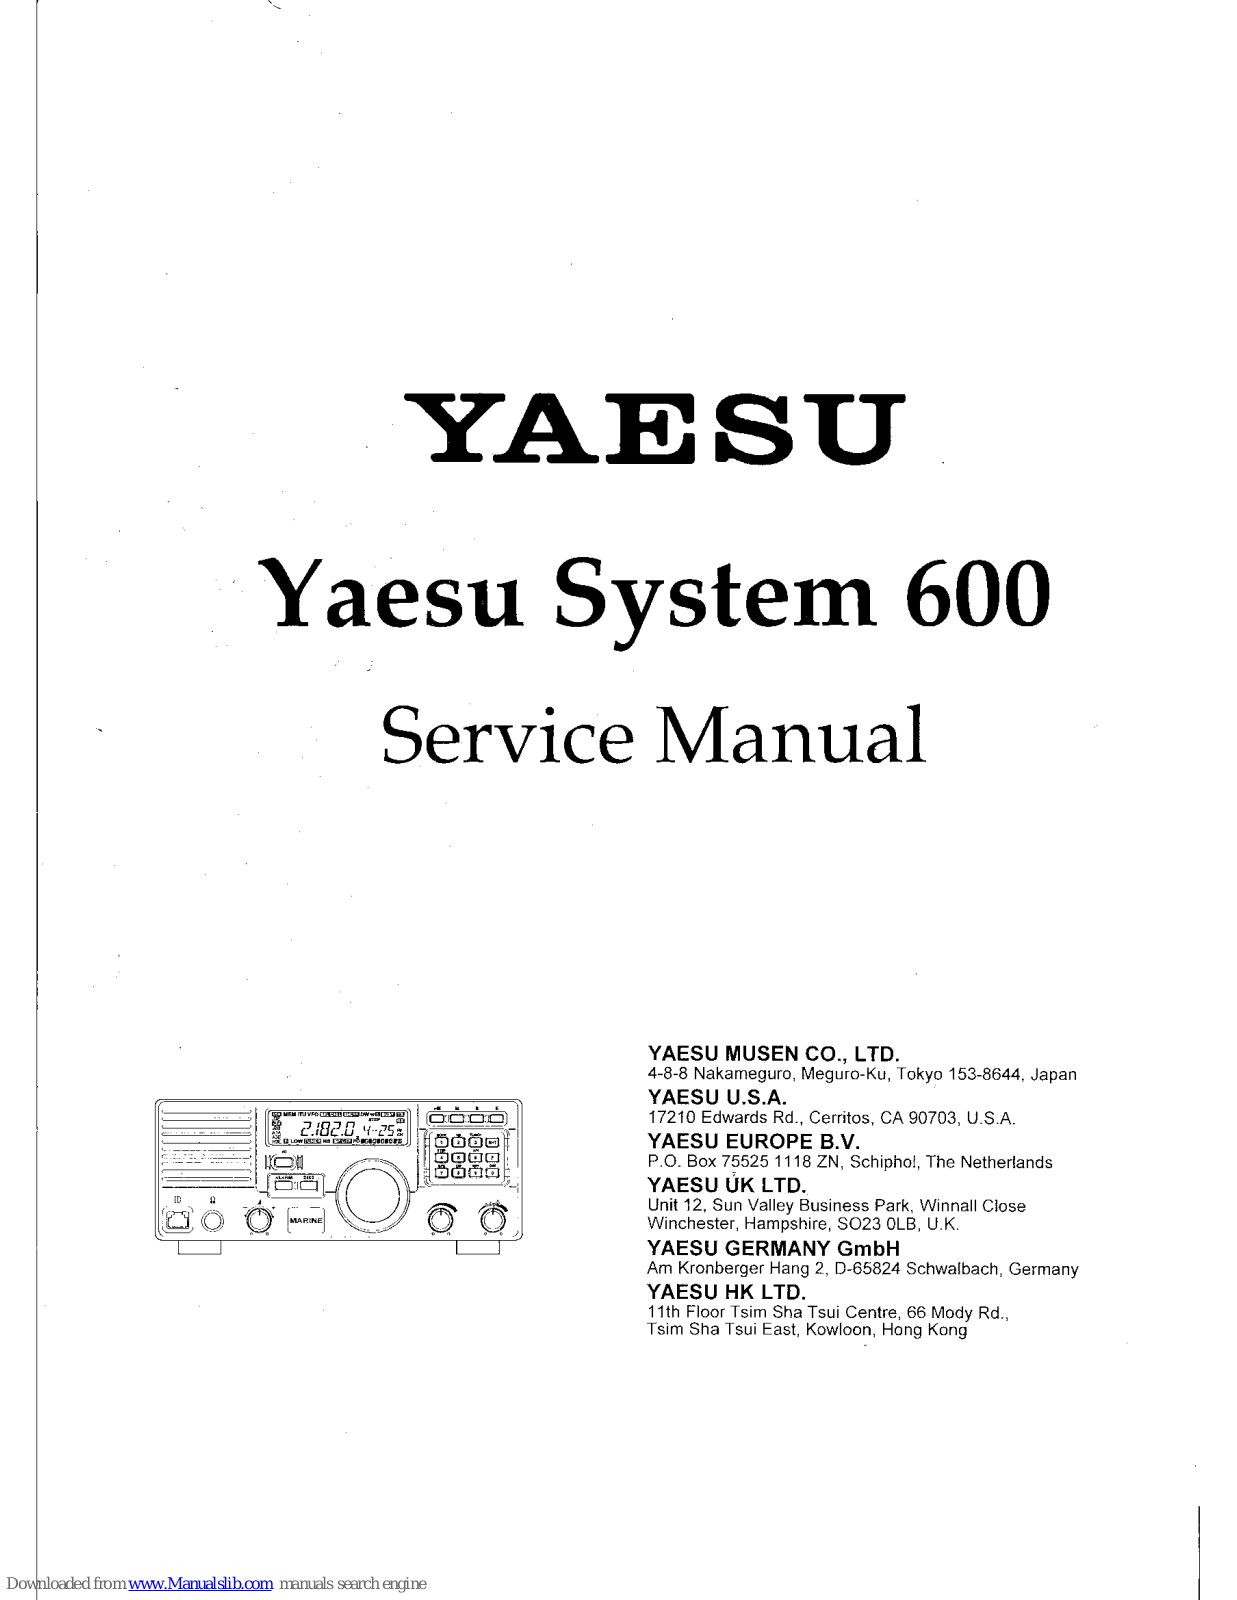 Yaesu 600 Service Manual